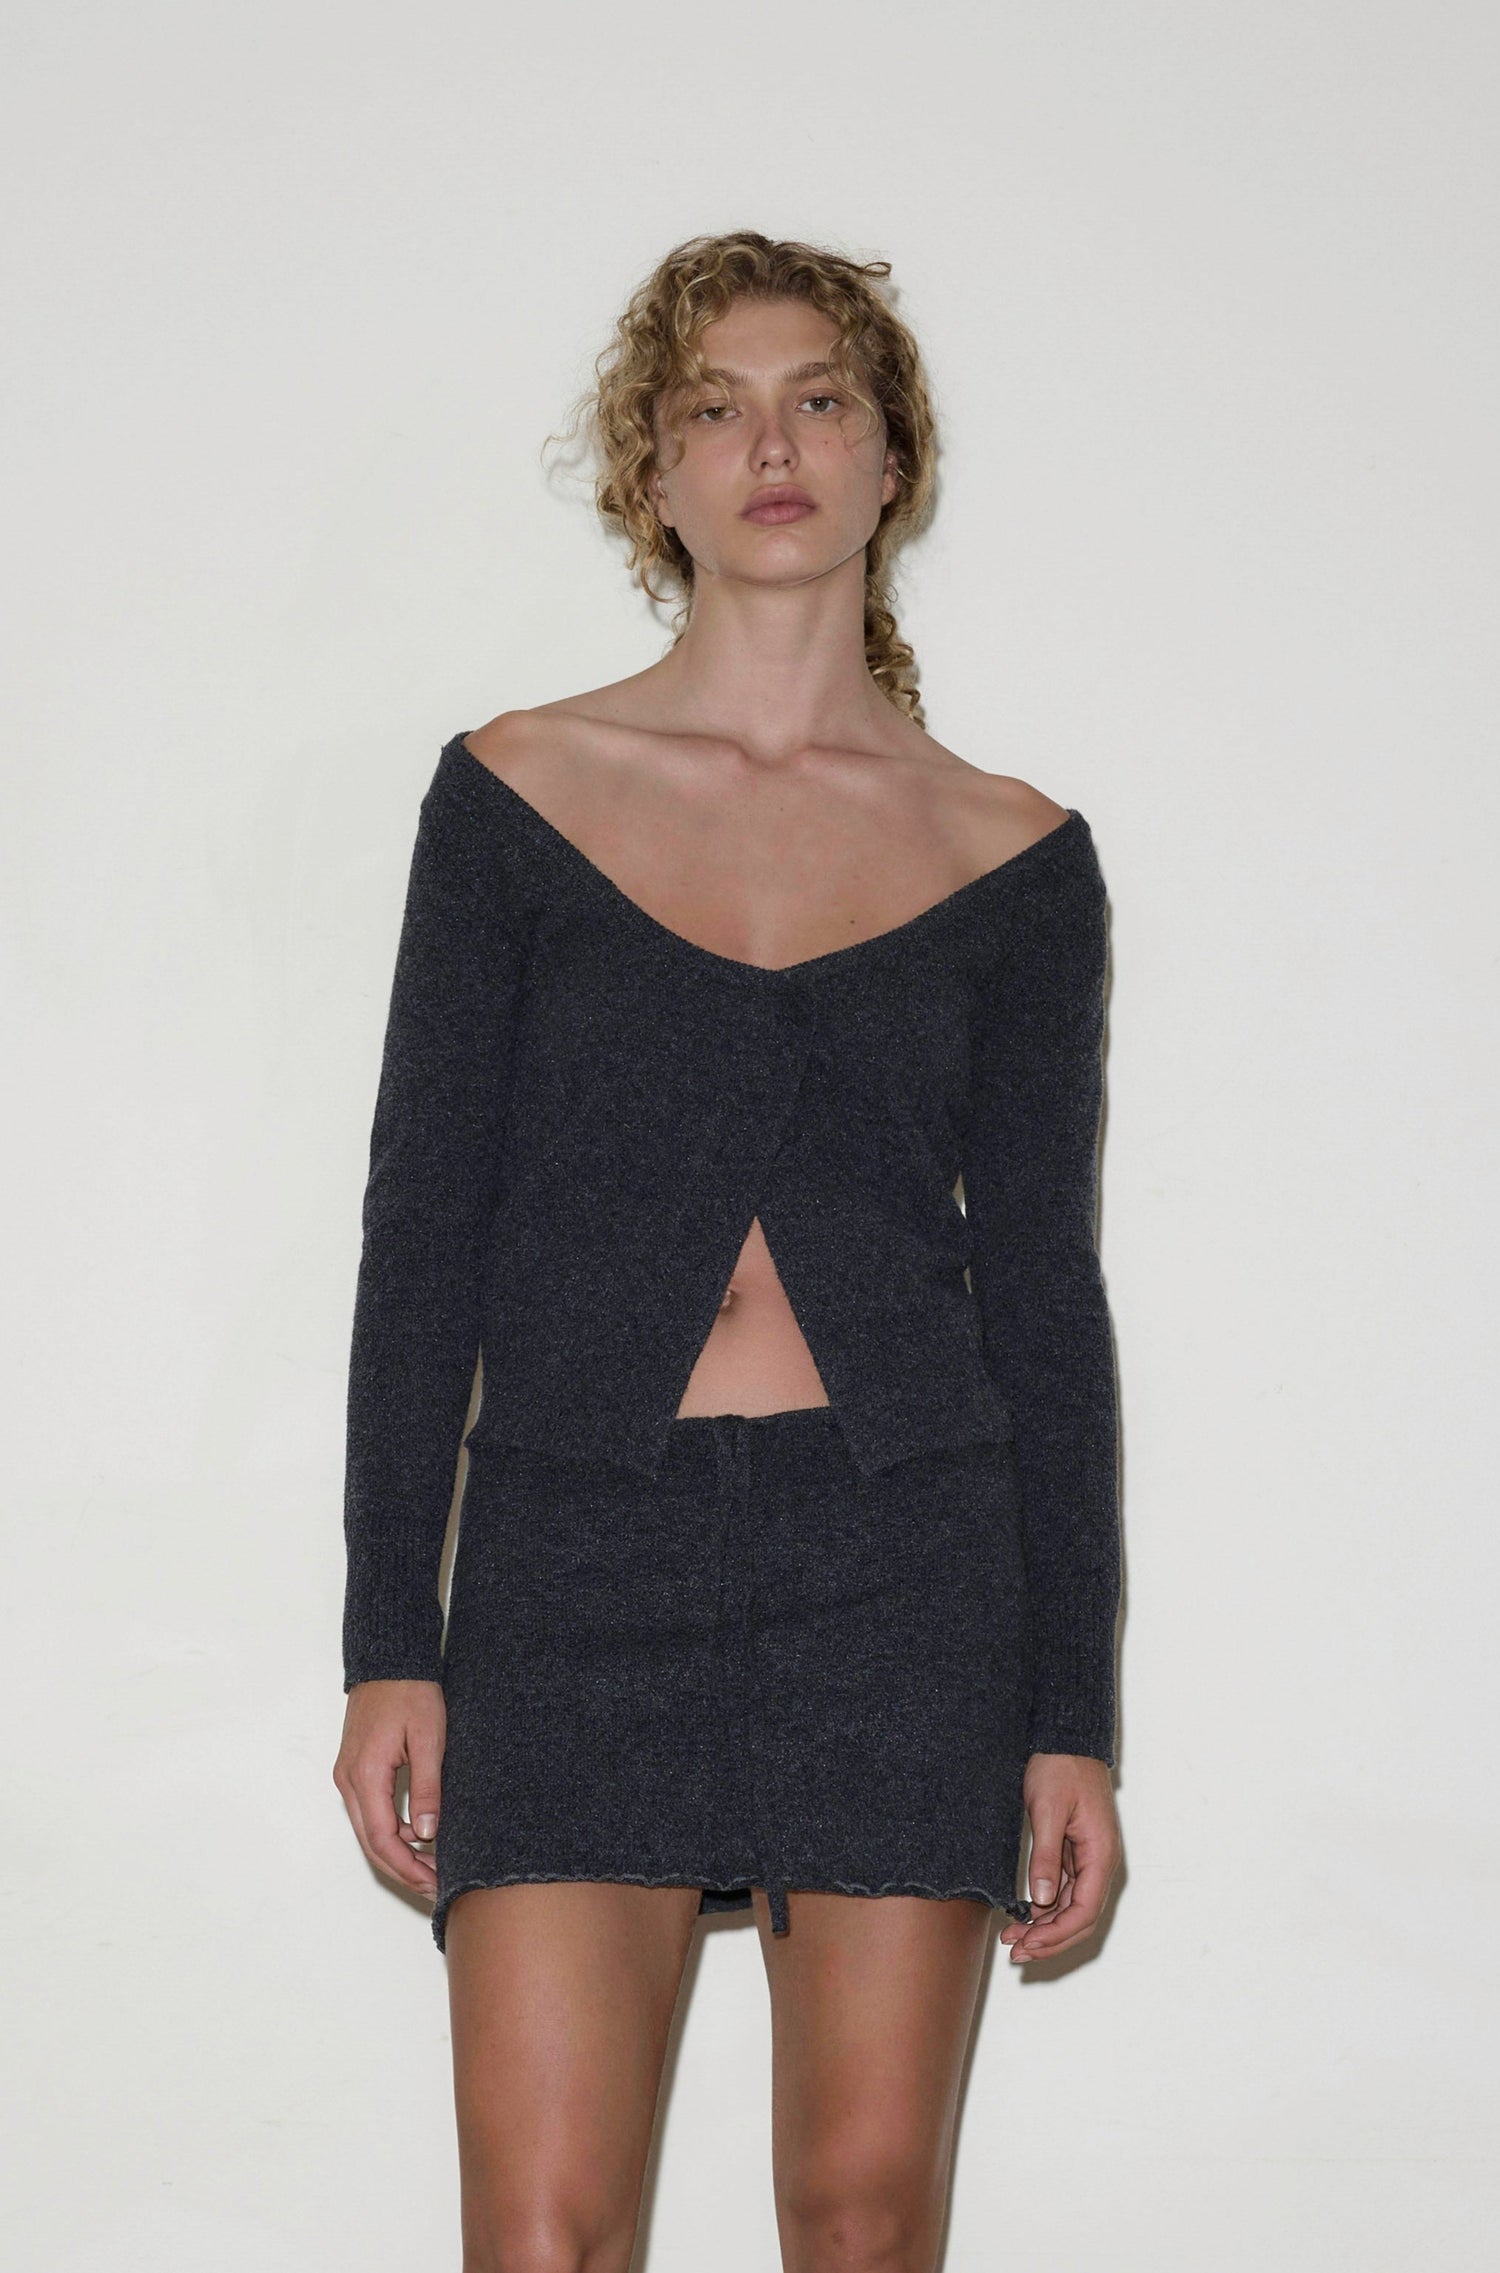 Female model wearing Asymmetric Knit Cardi - Charcoal by Deiji Studios against plain background